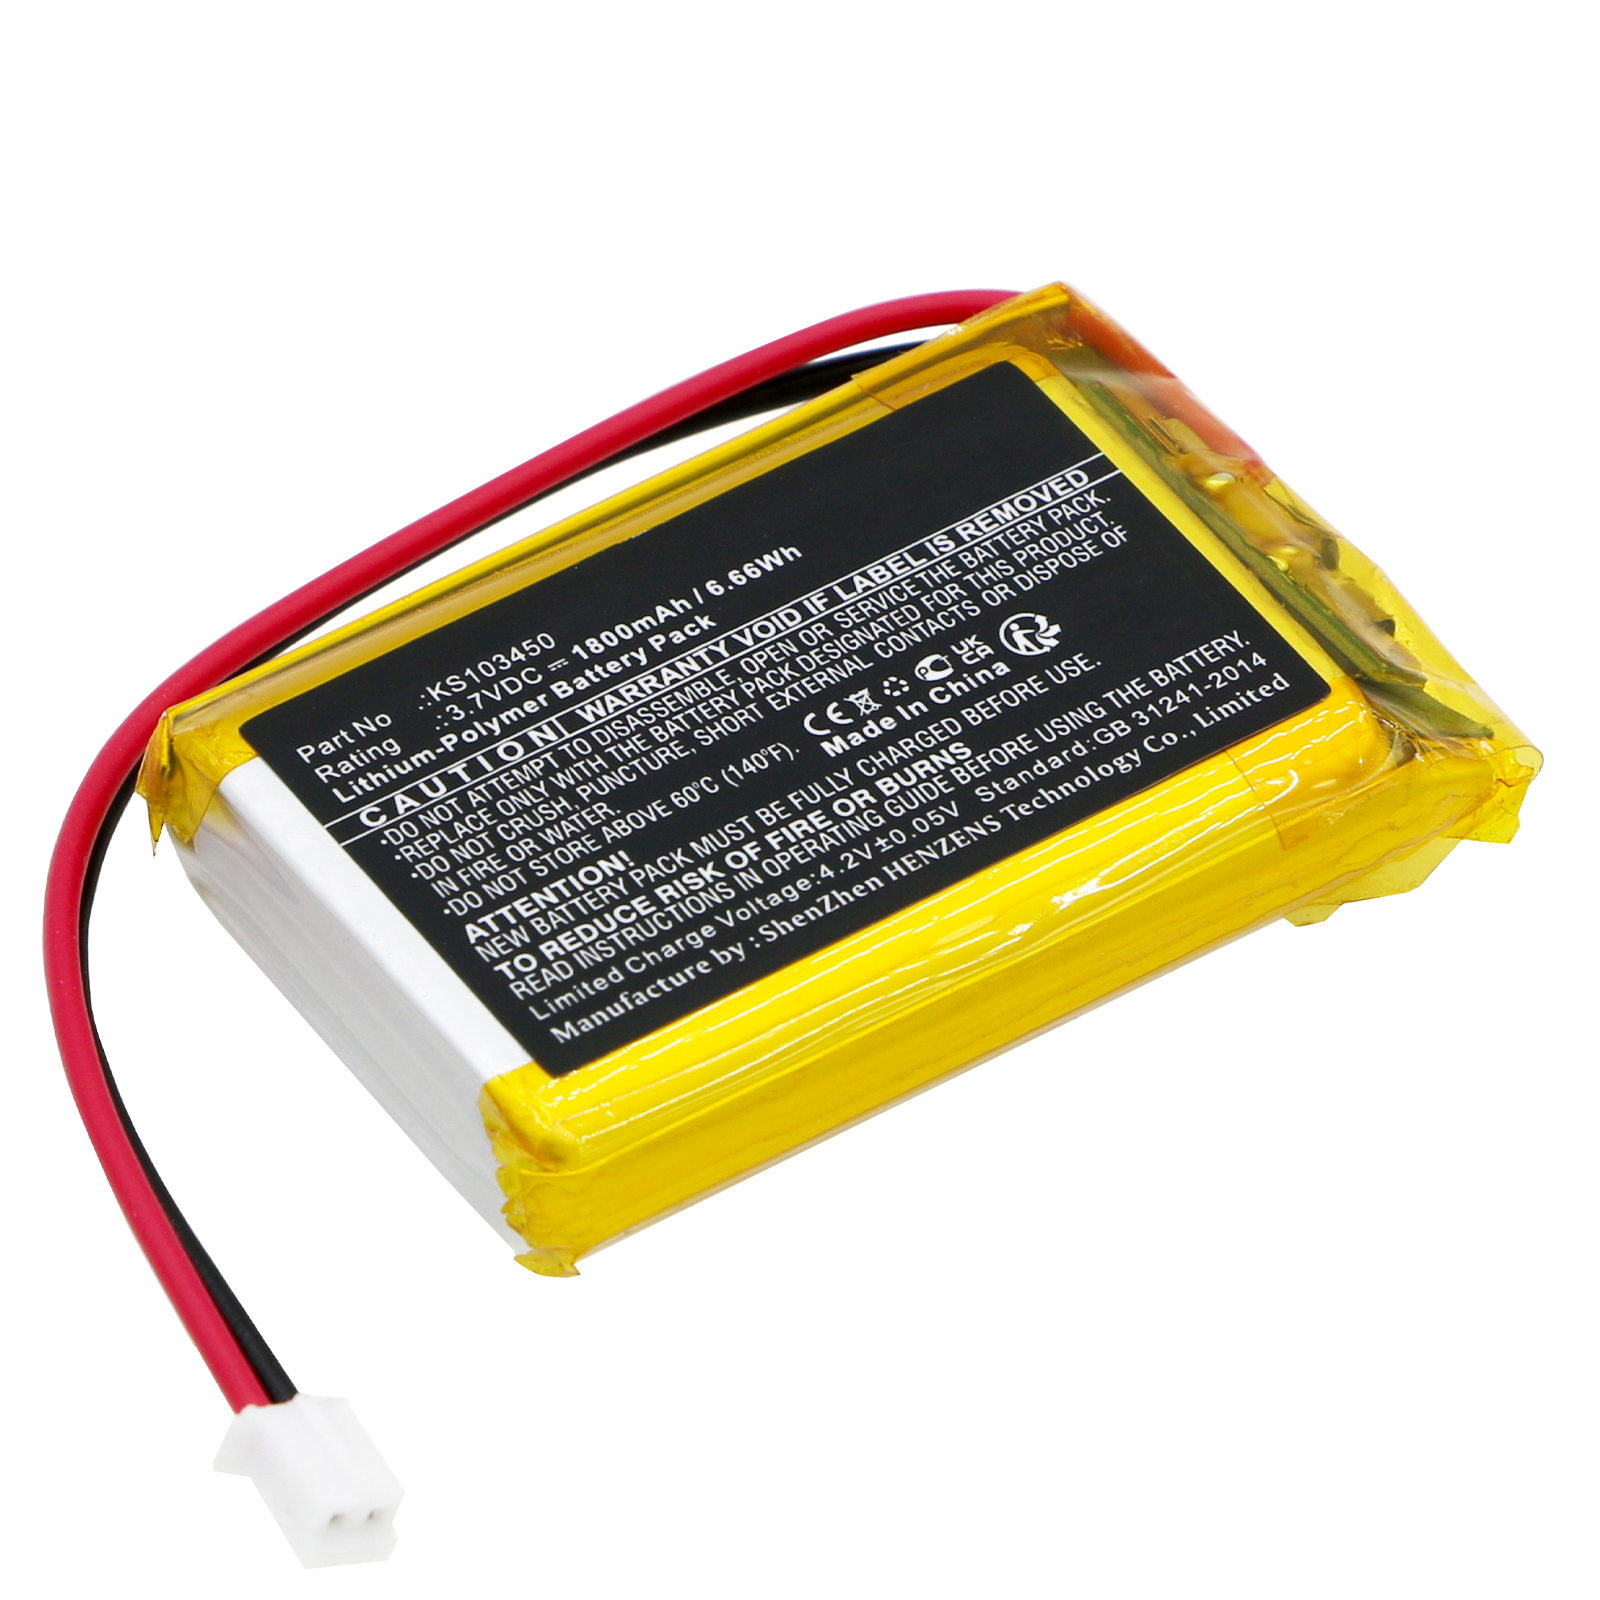 Synergy Digital Equipment Battery, Compatible with Kolsol KS103450 Equipment Battery (Li-Pol, 3.7V, 1800mAh)